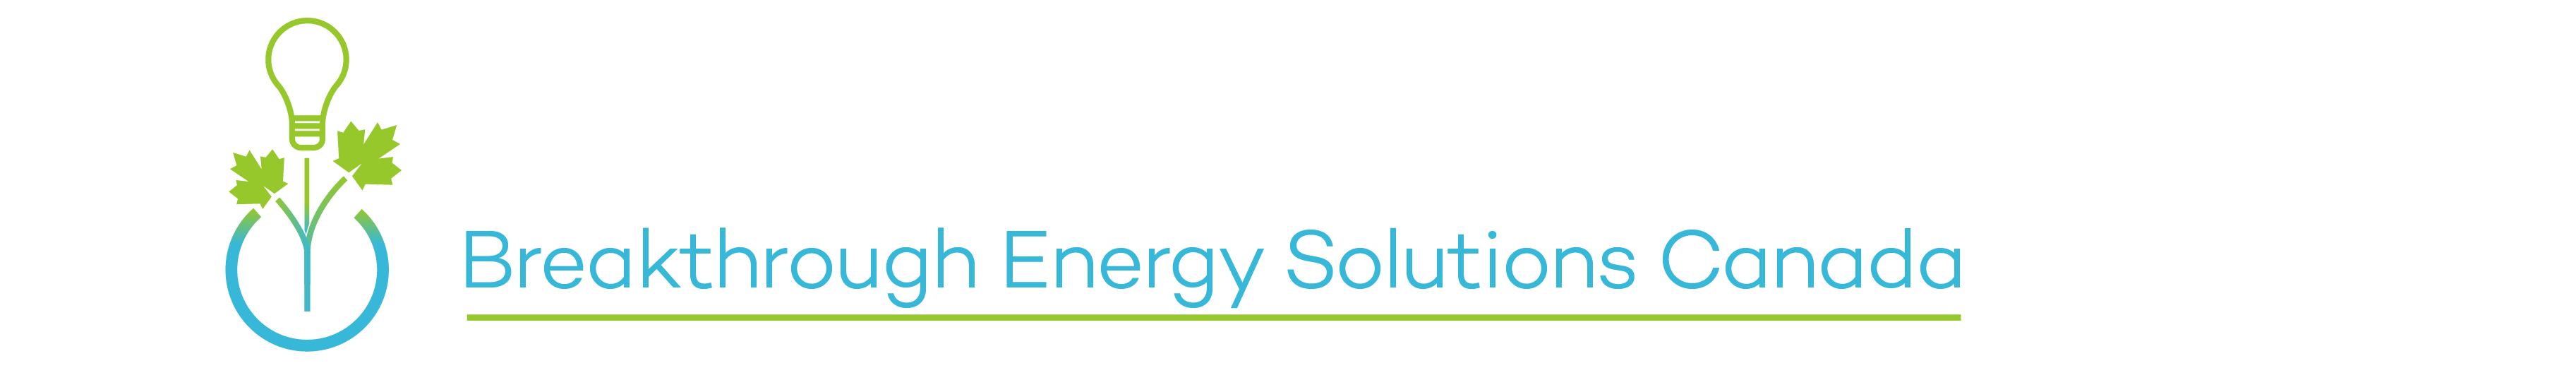 Breakthrough Energy Solutions Canada banner